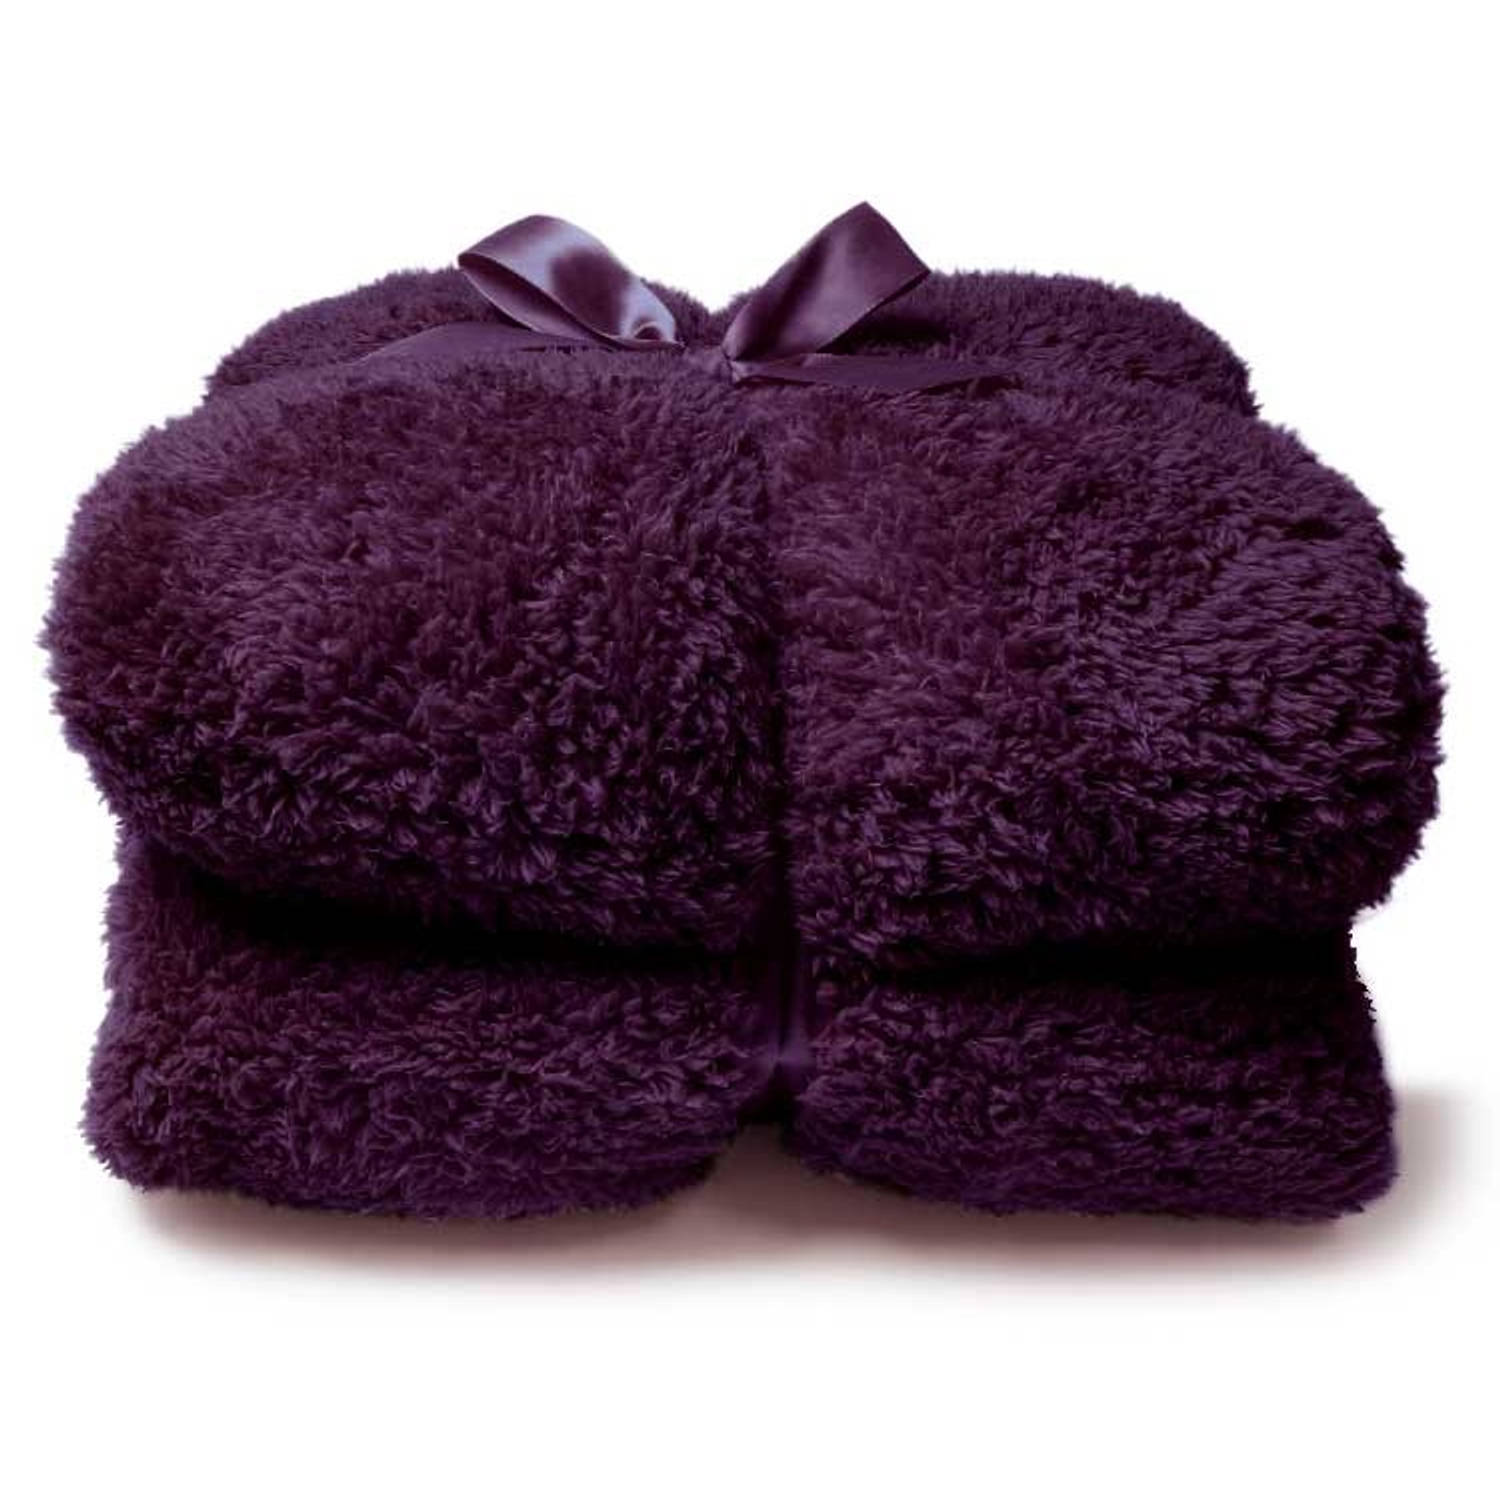 Unique Living - Plaid Teddy - 150x200cm - Dark Purple